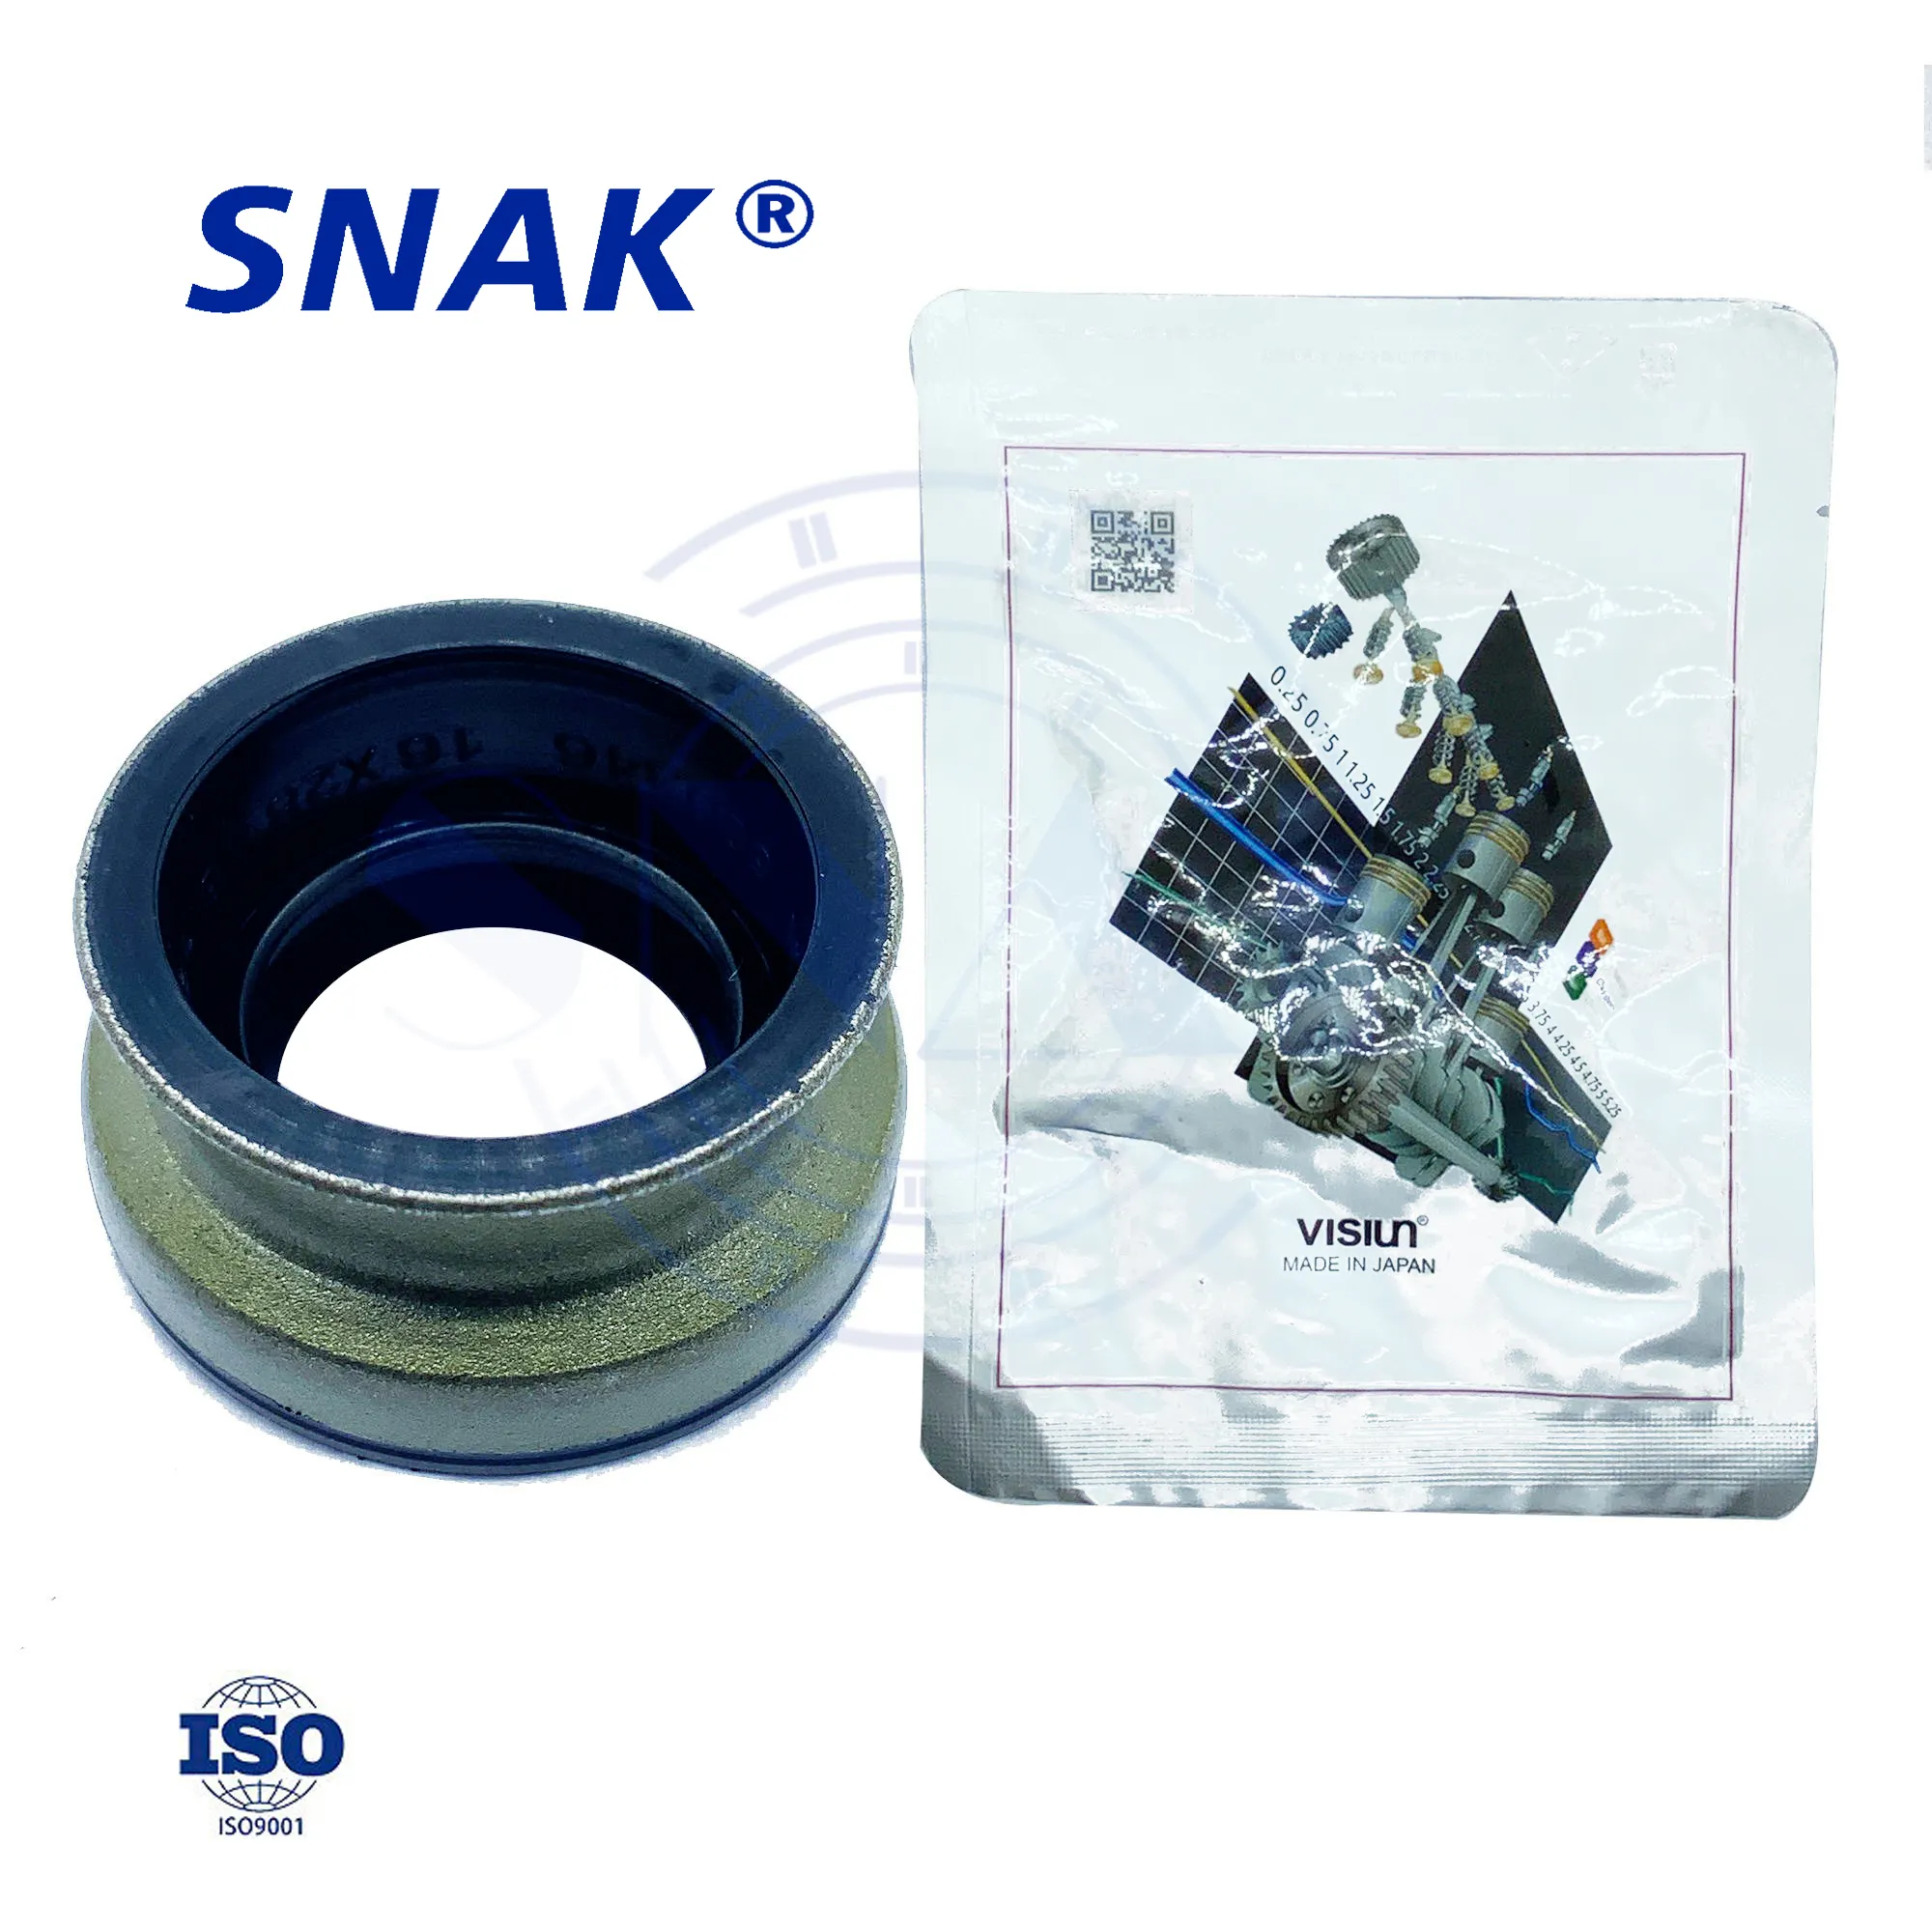 SNAK مصنع اليابان VISIUN عالية المتانة NBR المواد 16*28*6/15.2/23 500346 MF401-17-131A هيونداي كيا سدادة عمود دوار